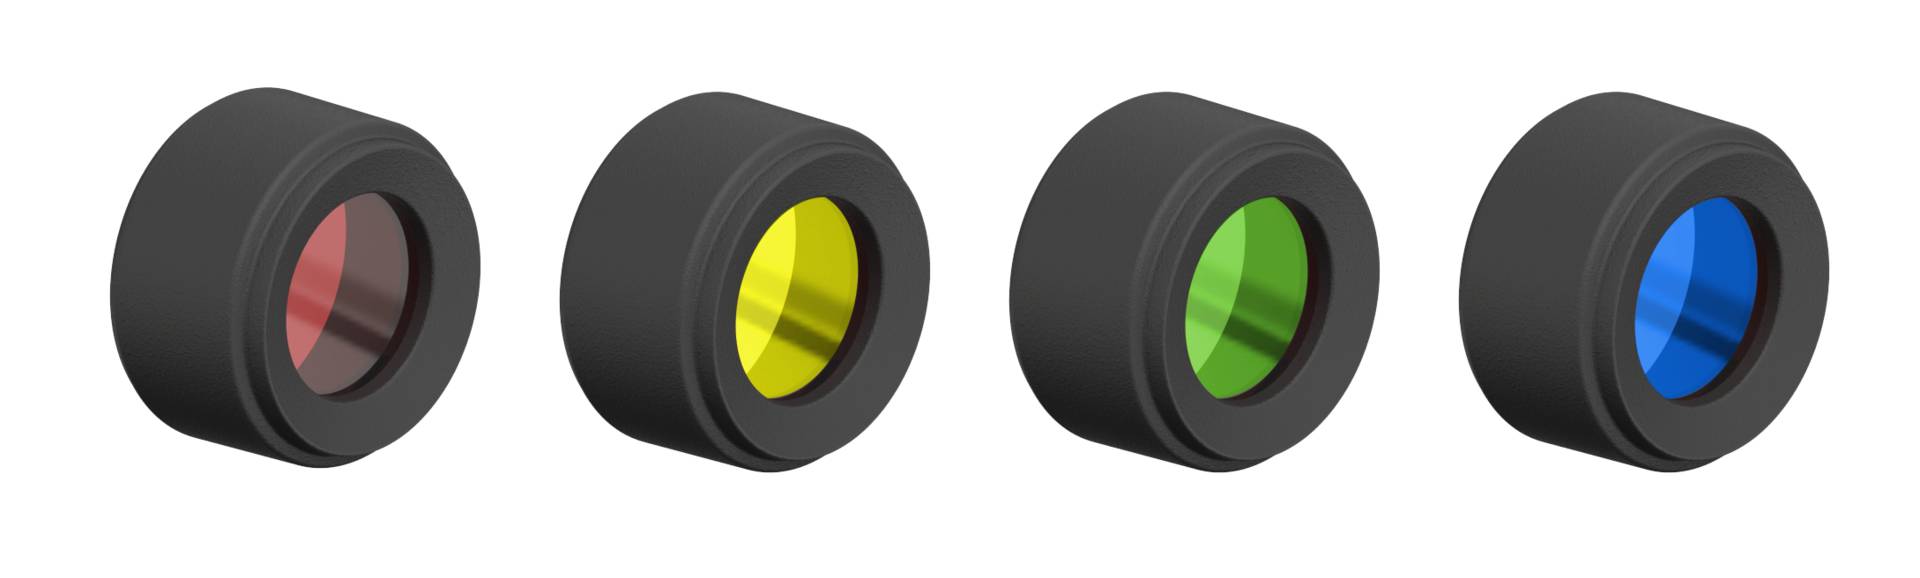 Ledlenser Color Filter Set 29.5mm - Farbfilter für Taschenlampen von Ledlenser GmbH & Co Kg